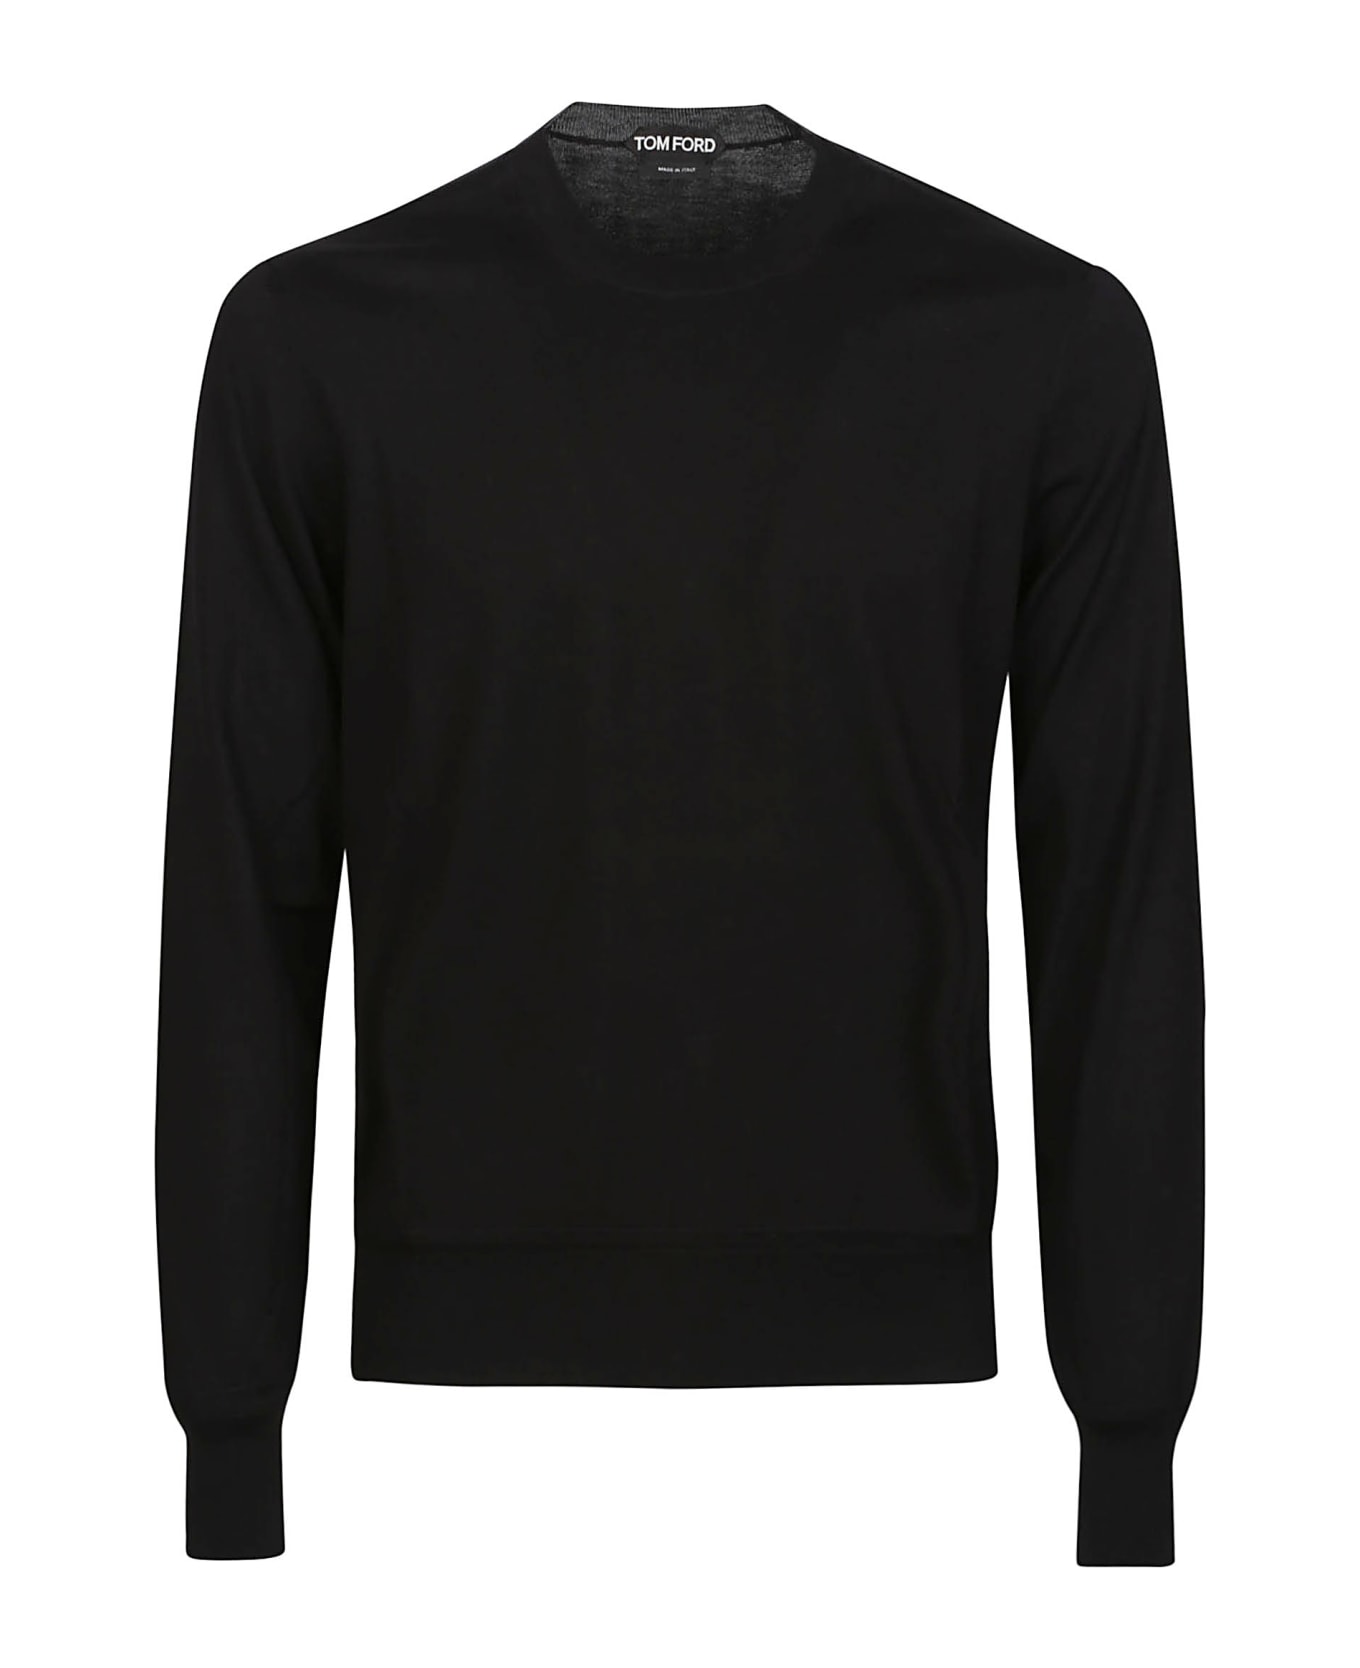 Tom Ford Long Sleeve Sweater - Black